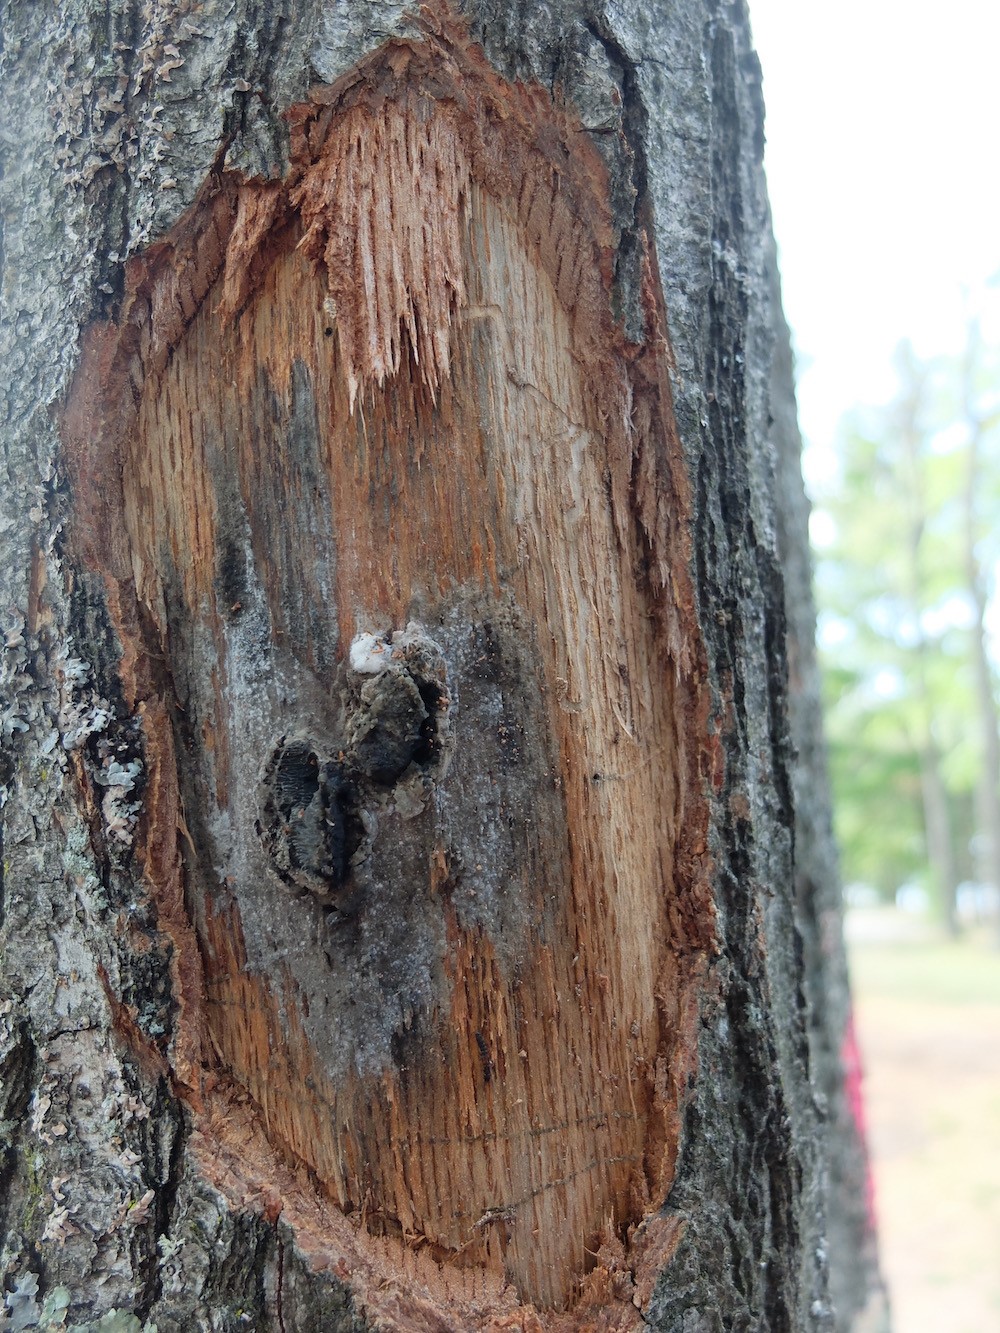 Mycelial mat and pressure pad detected in an oak tree